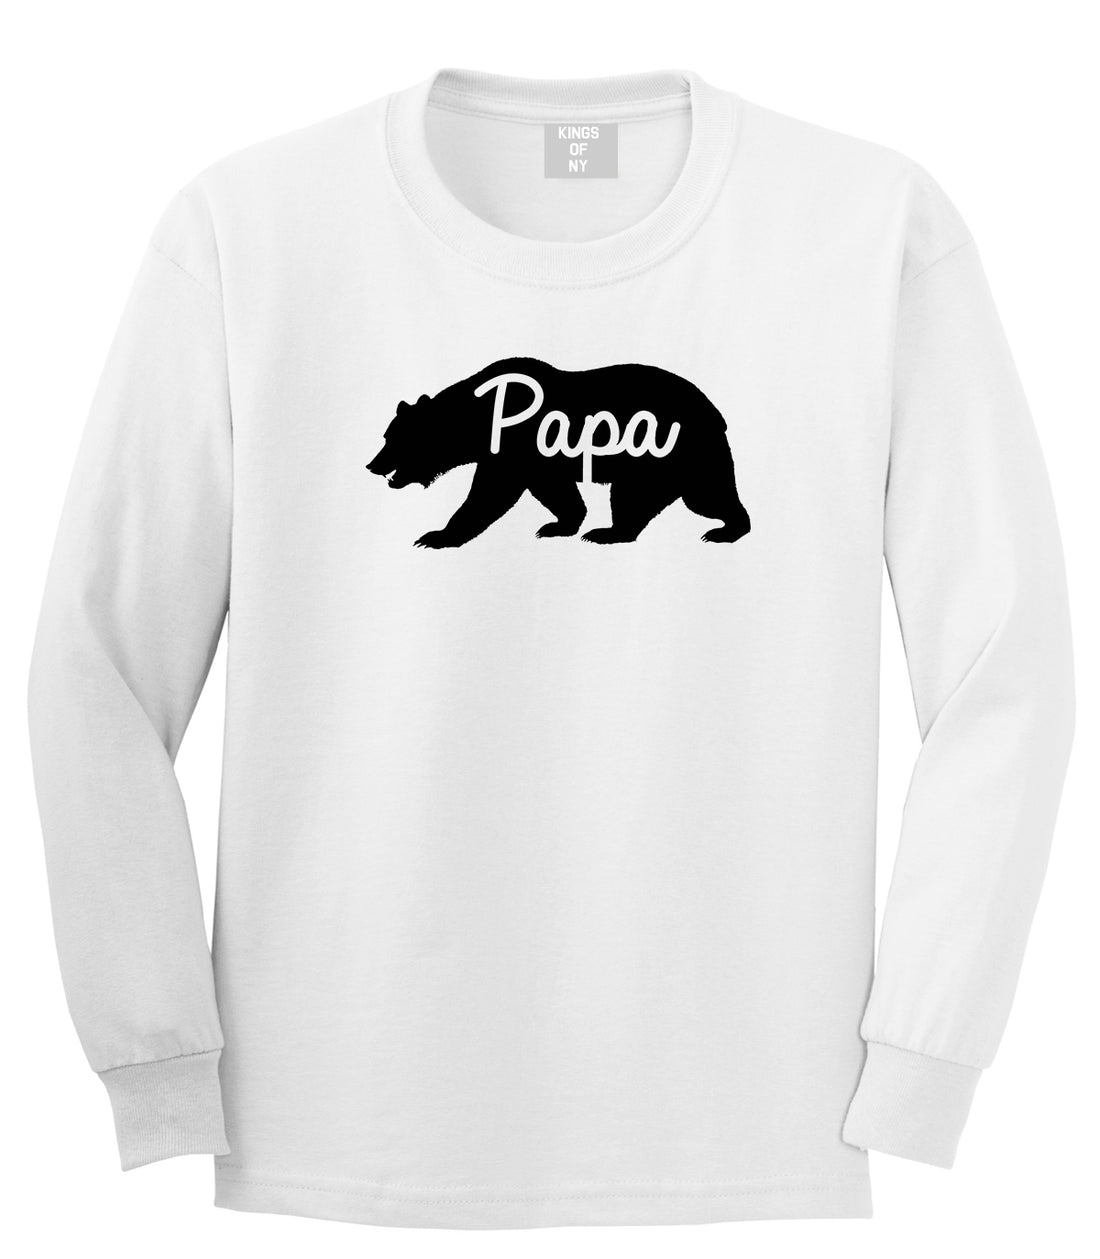 Papa Bear Mens Long Sleeve T-Shirt White by Kings Of NY